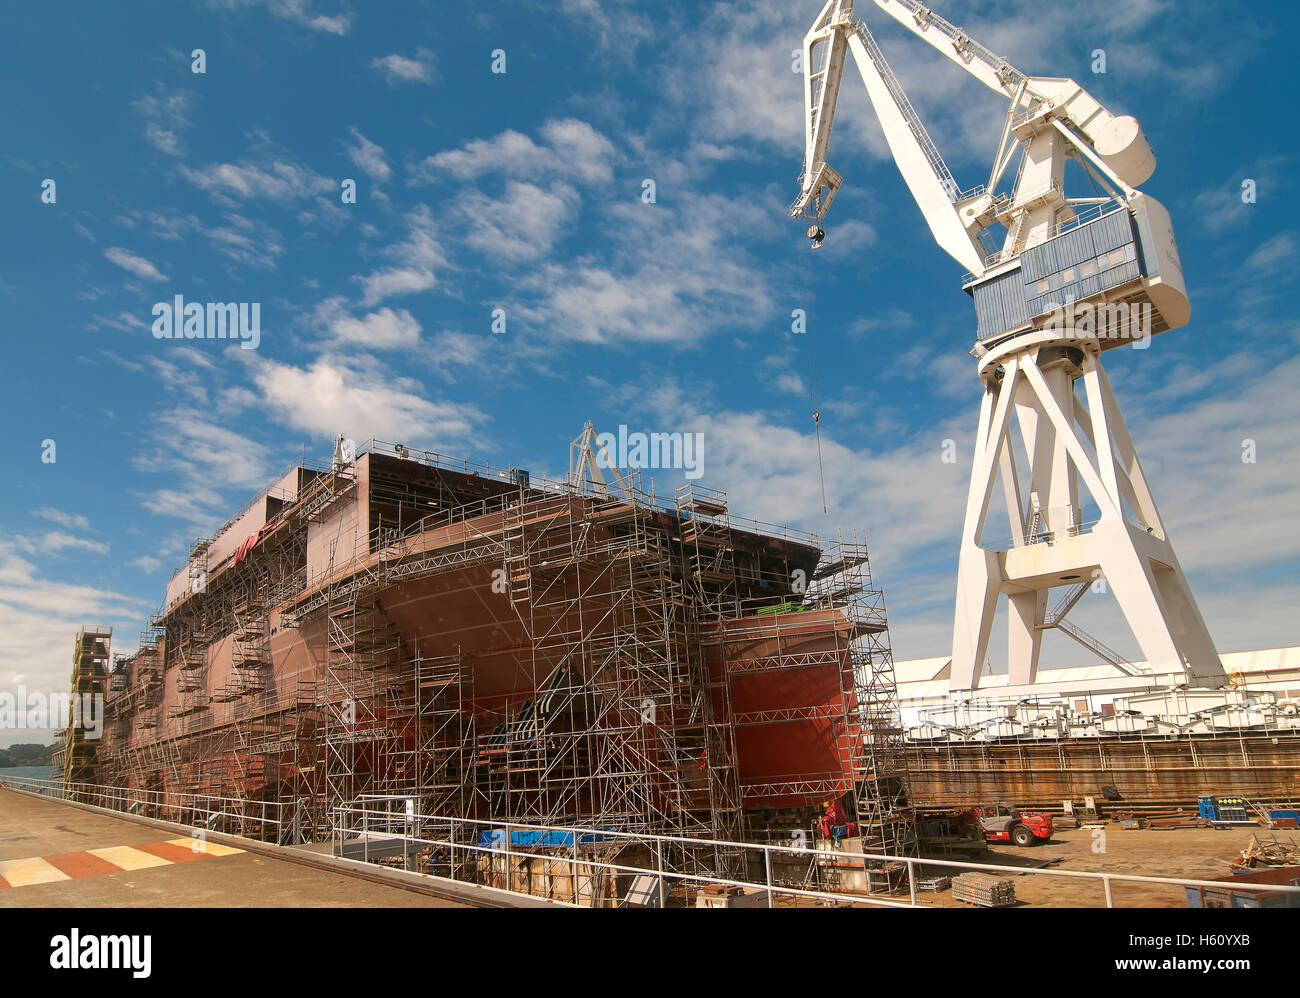 Shipyard industry, Ferrol, La Coruña province, Region of Galicia, Spain, Europe Stock Photo